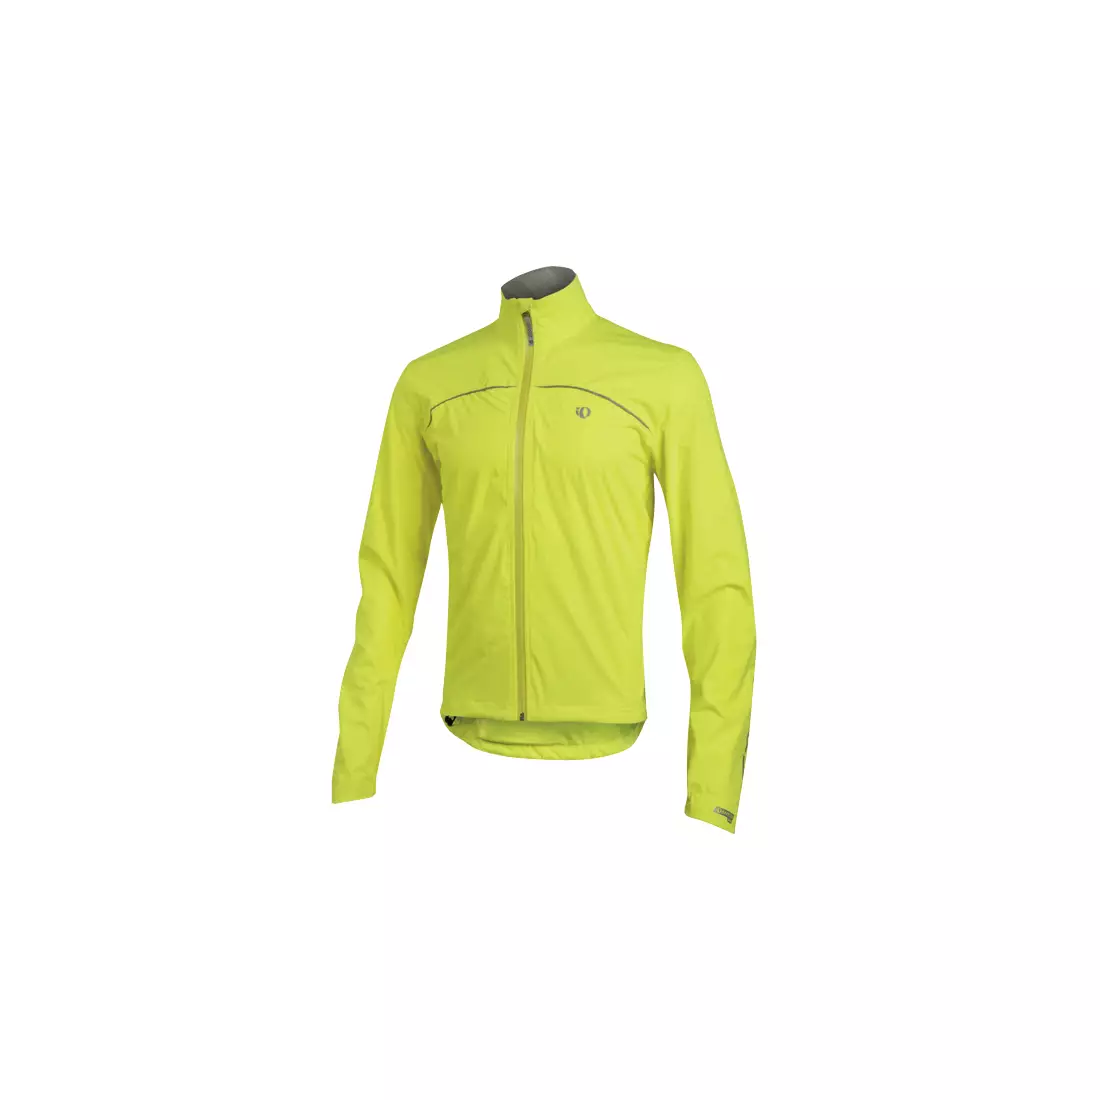 PEARL IZUMI SELECT Barrier WxB 11131008-428 - cycling jacket